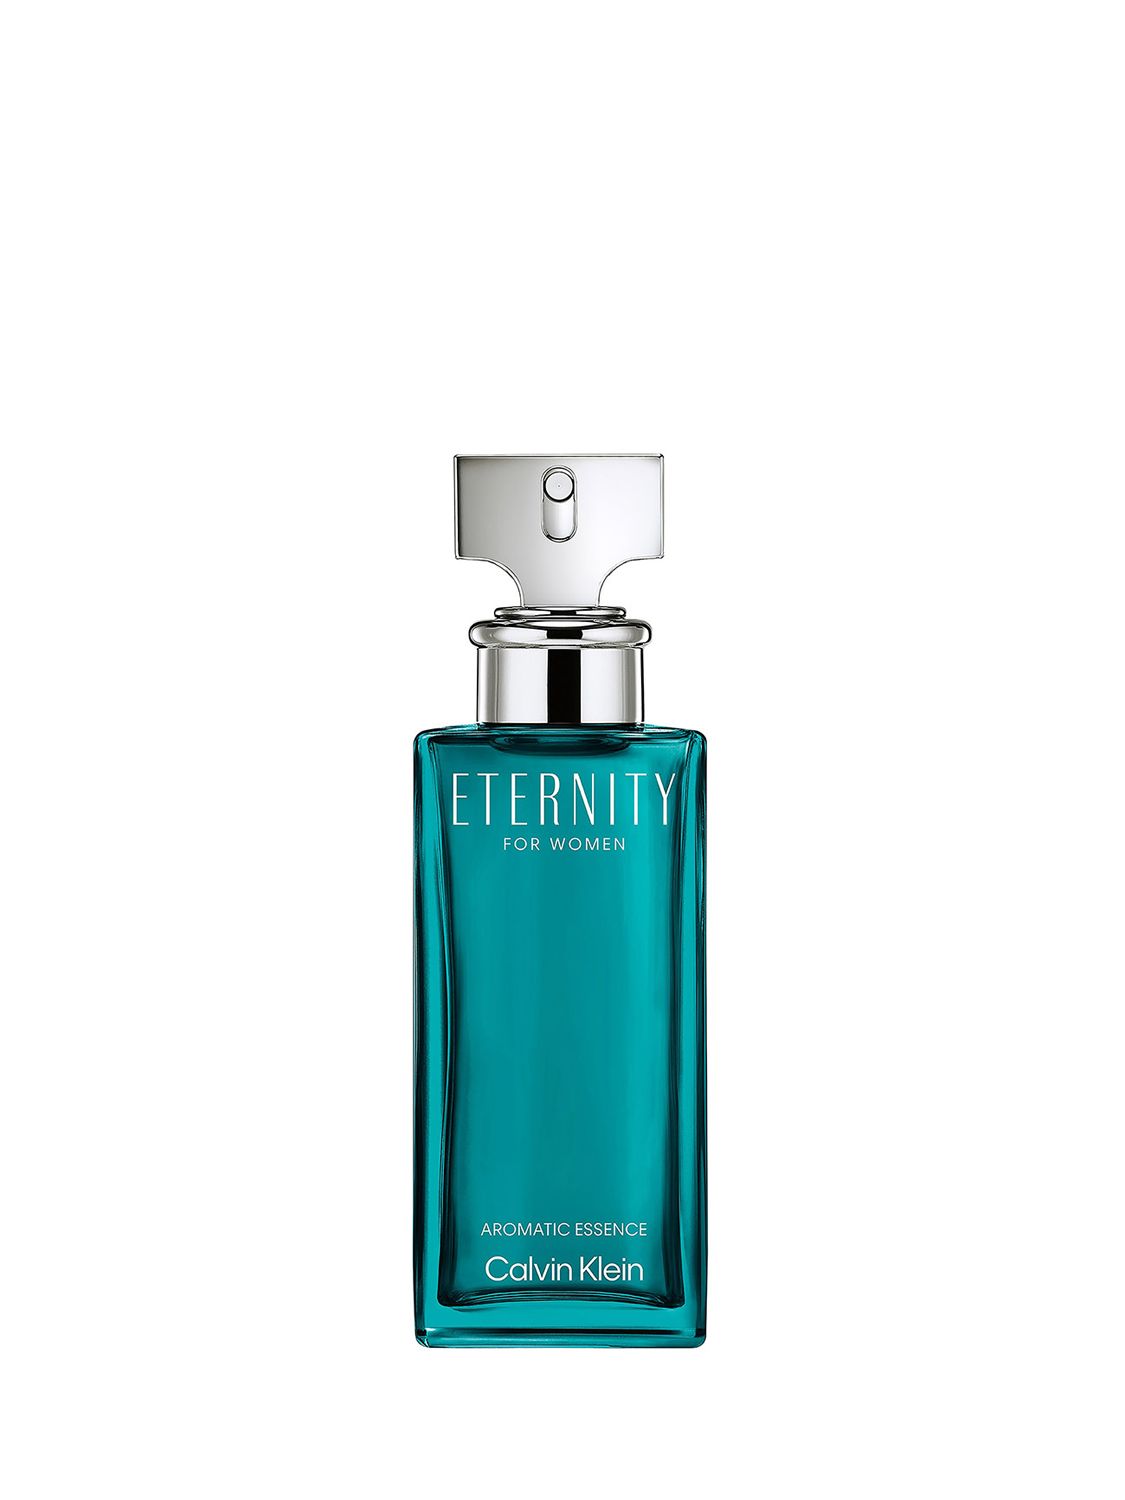 Calvin Klein Eternity Aromatic Essence for Women Eau de Parfum Intense, 100ml 1